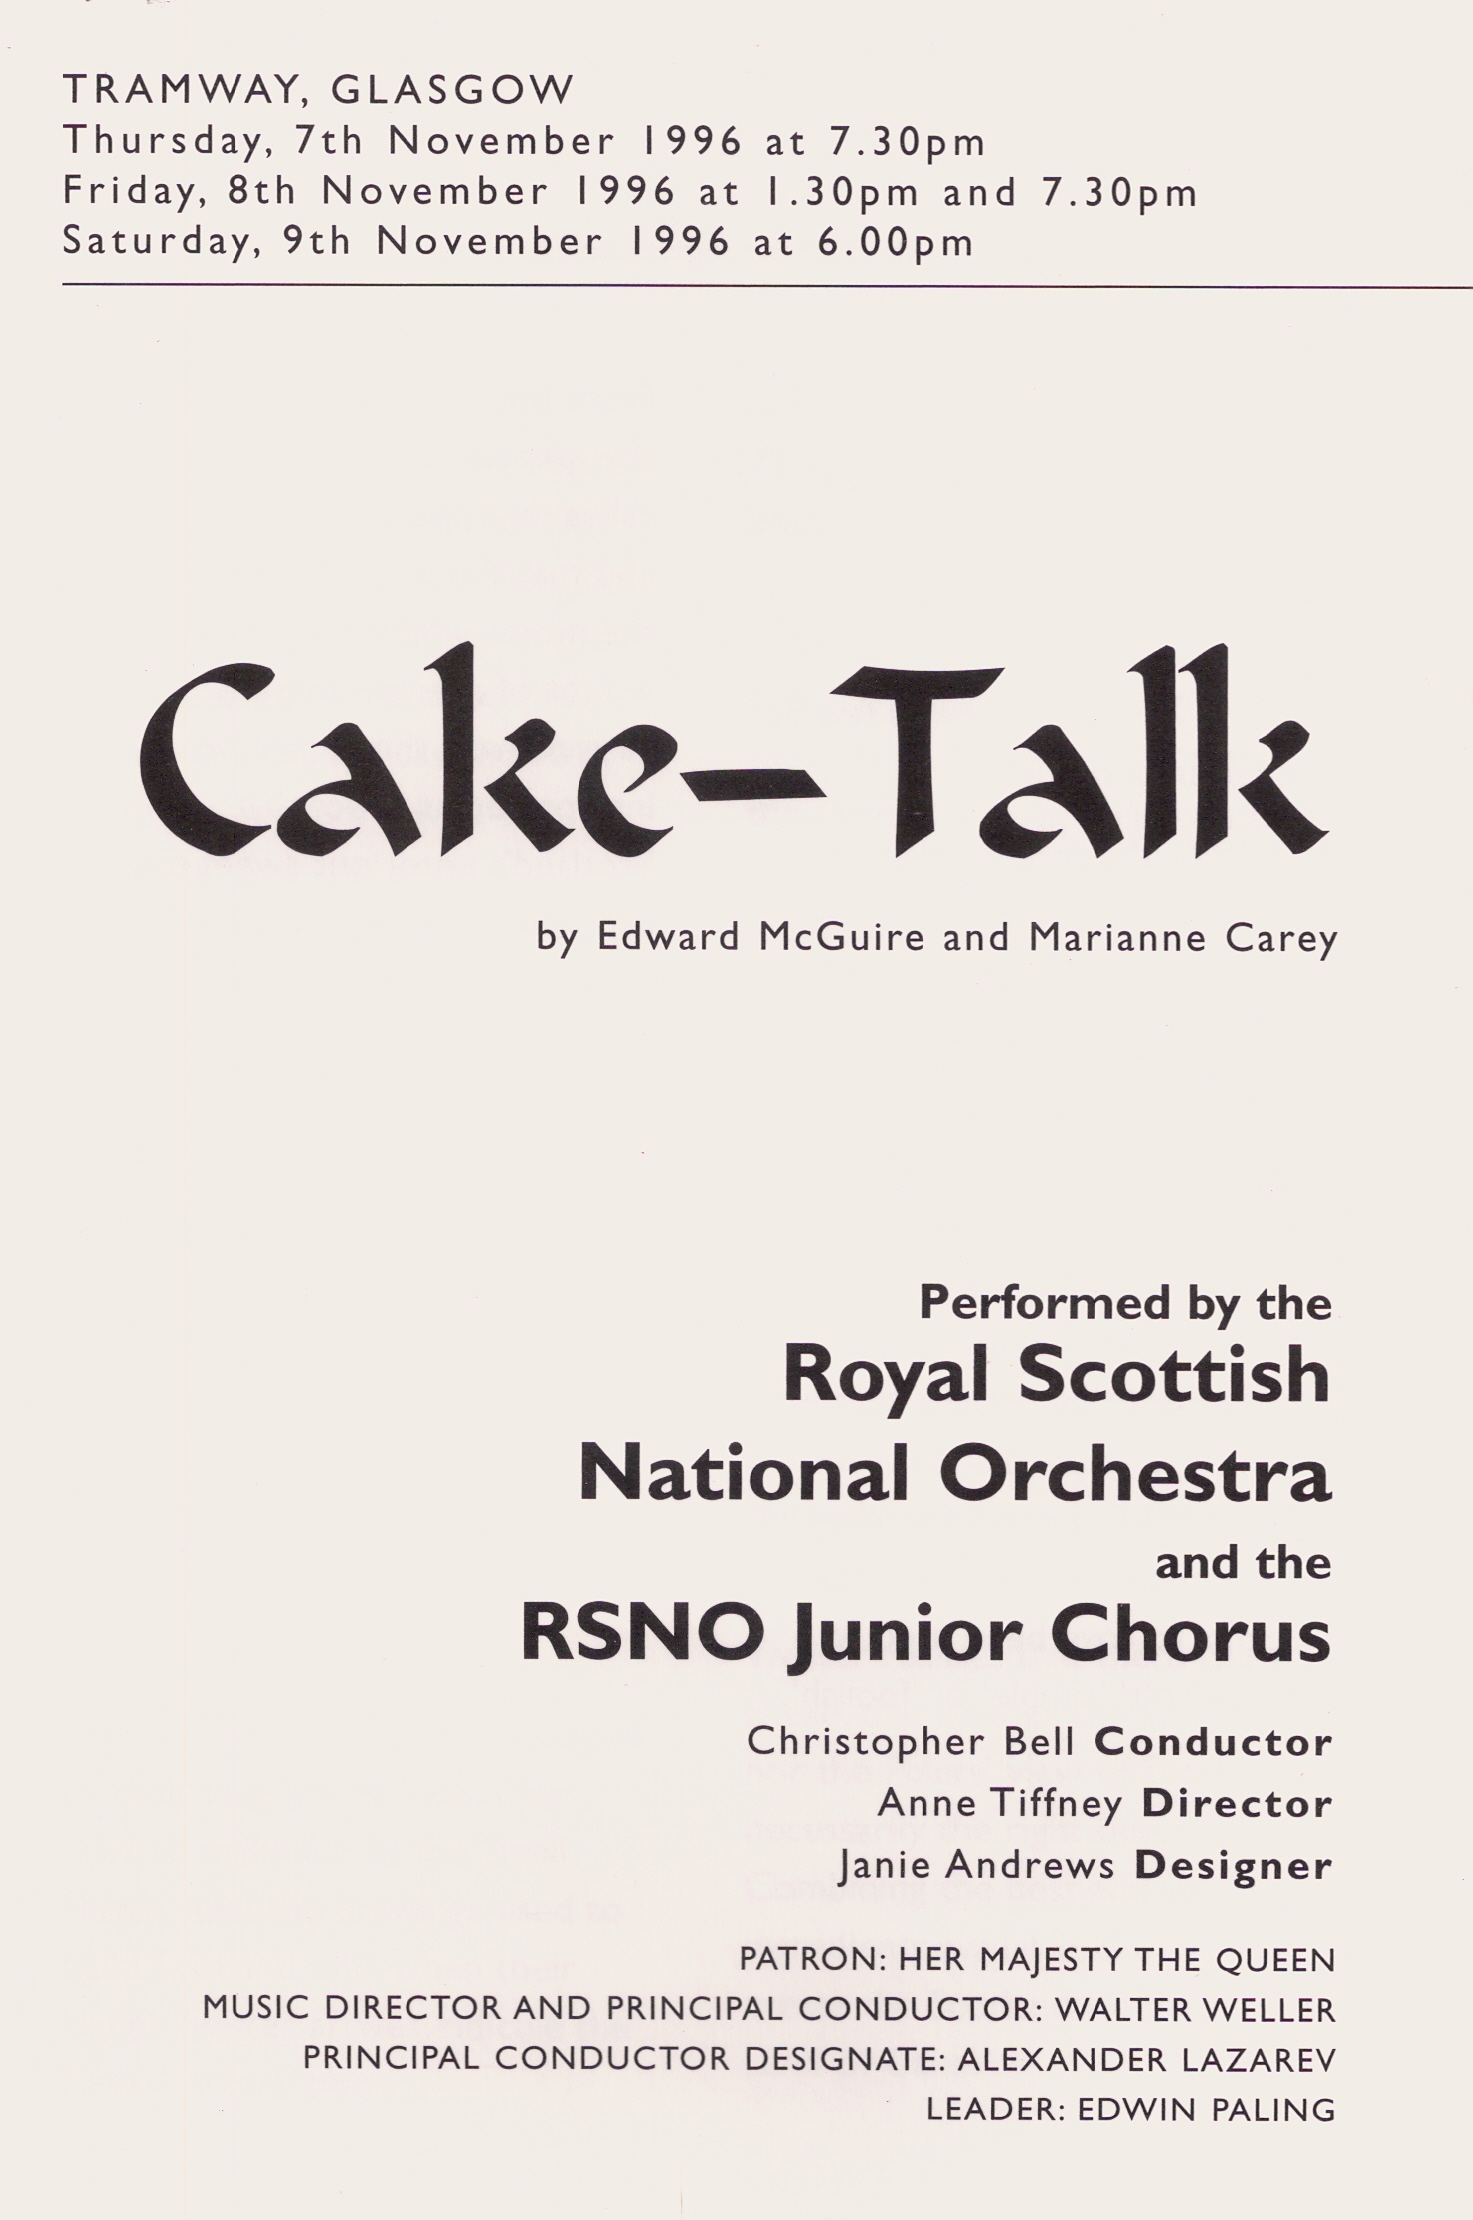 Cake-Talk programme November 1996